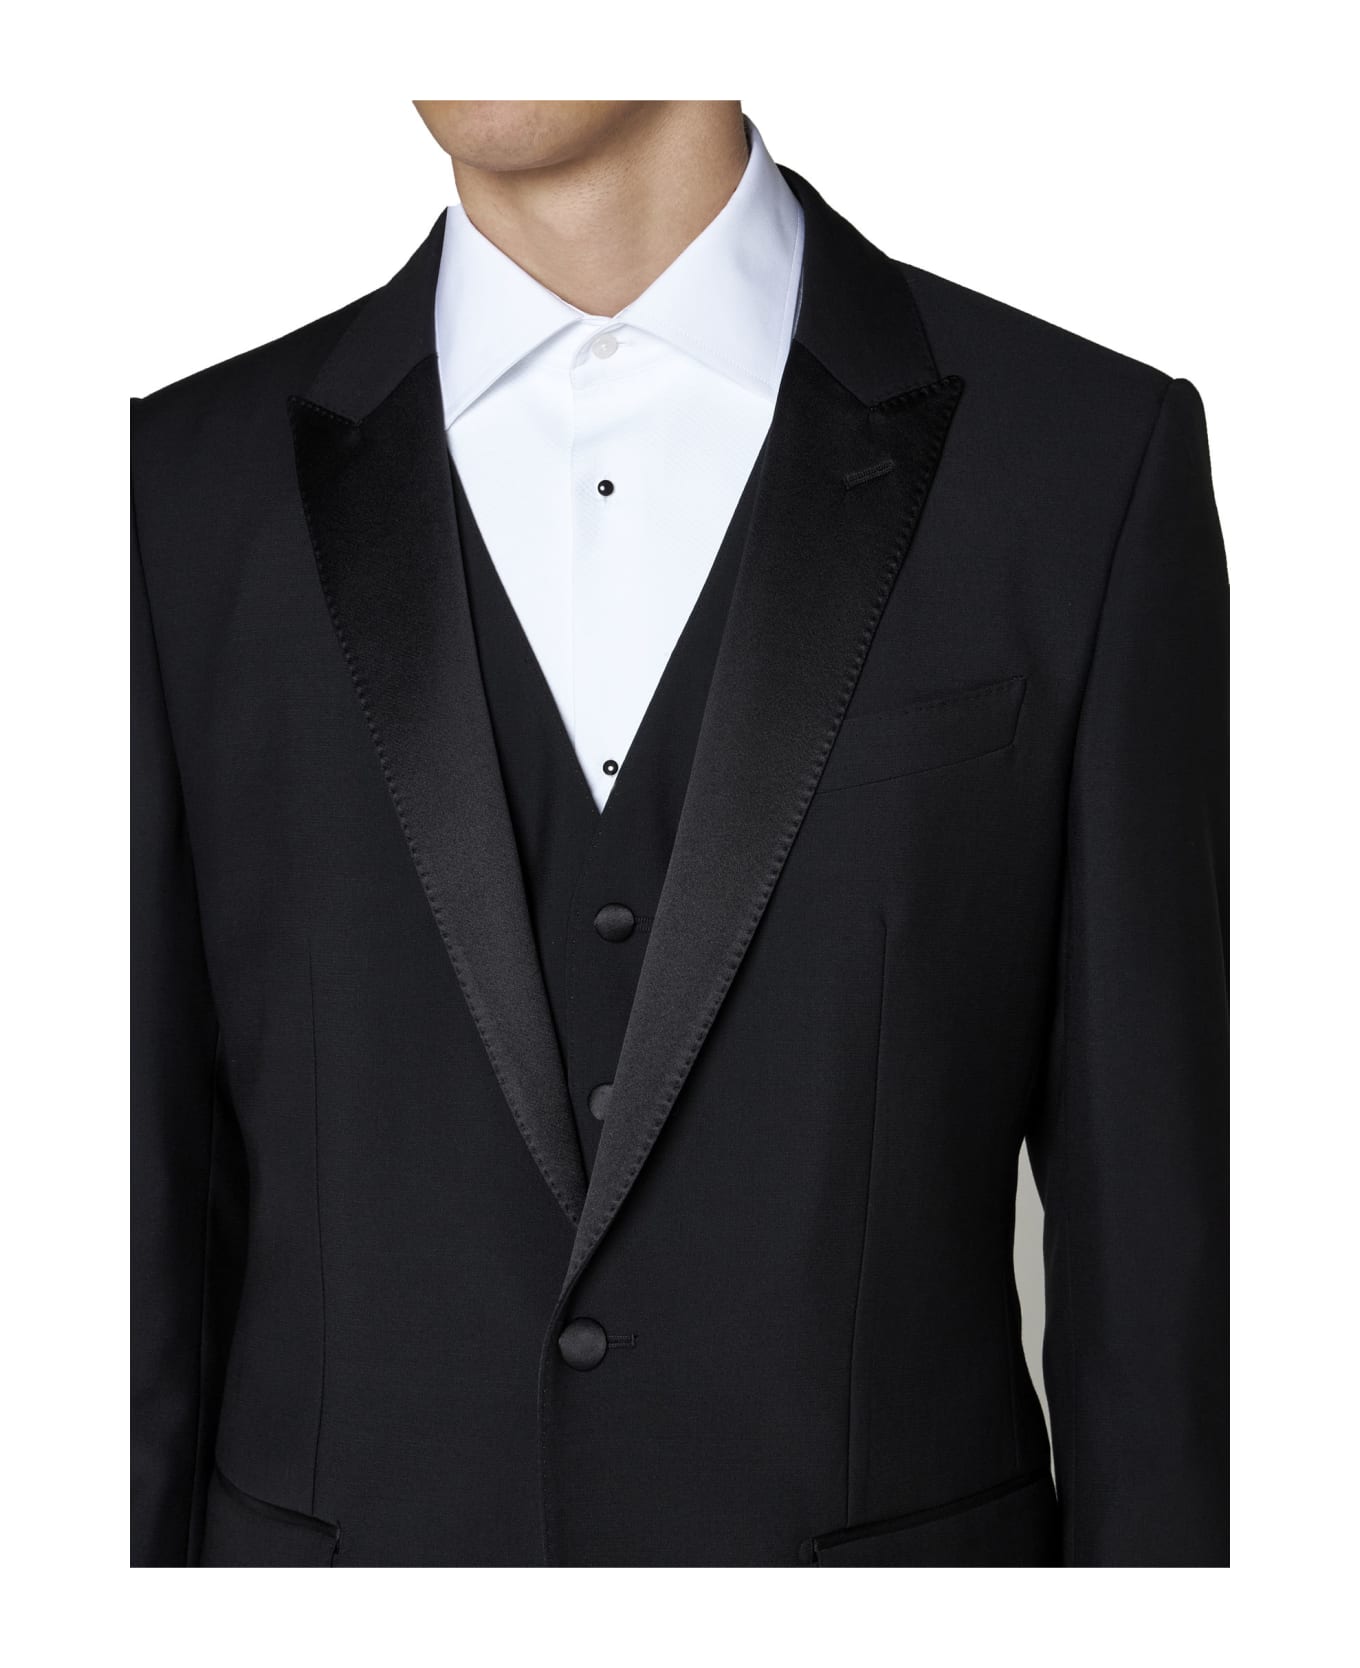 Dolce & Gabbana Suit - Nero スーツ